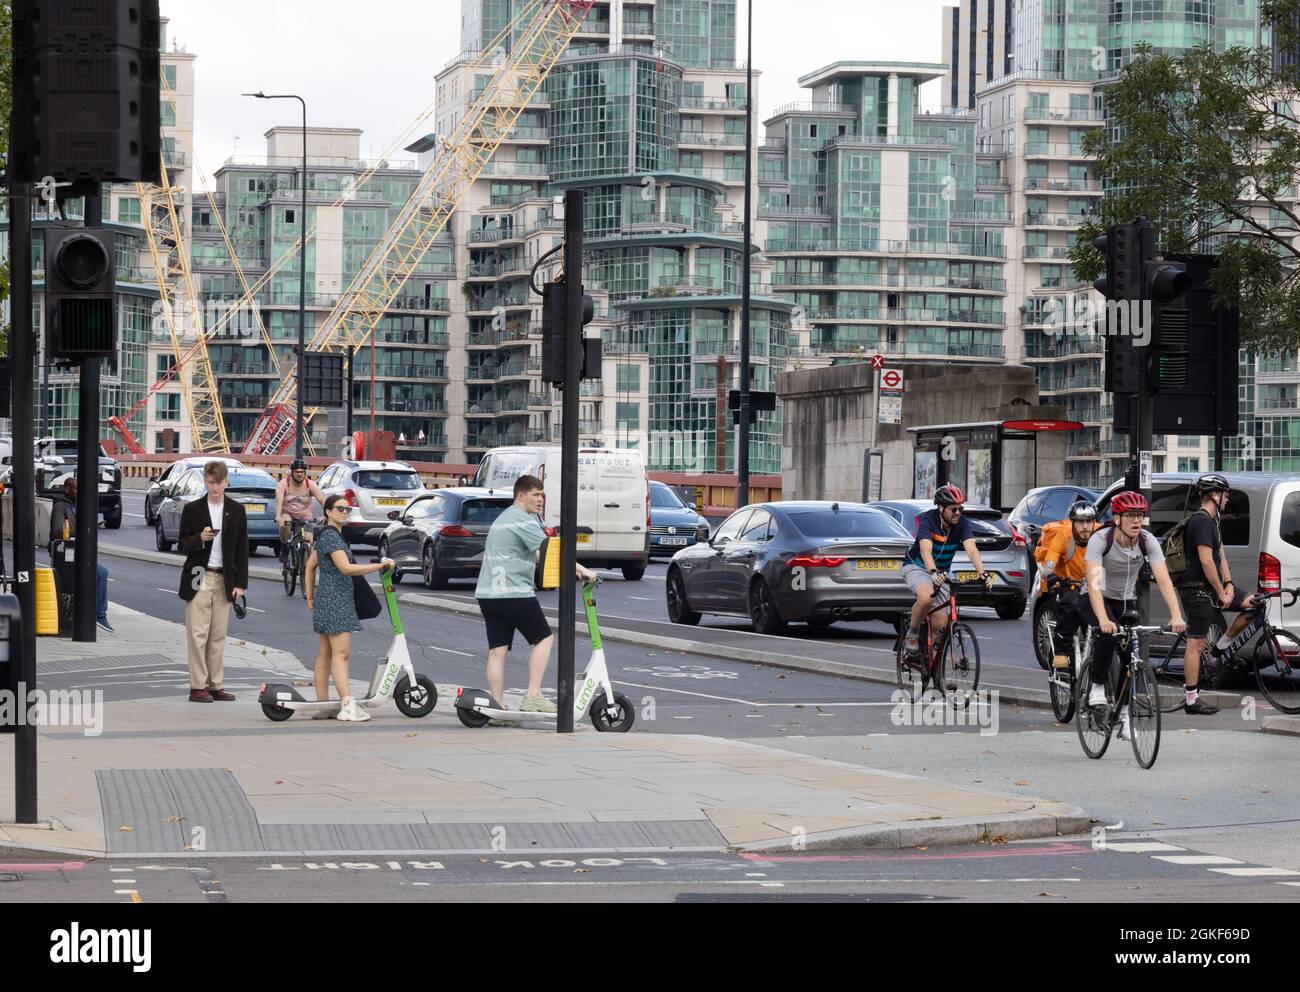 City life UK; London Street scene London SW1; Cyclists, scooter riders, cars and traffic  on Vauxhall Bridge Road, Pimlico London UK Stock Photo